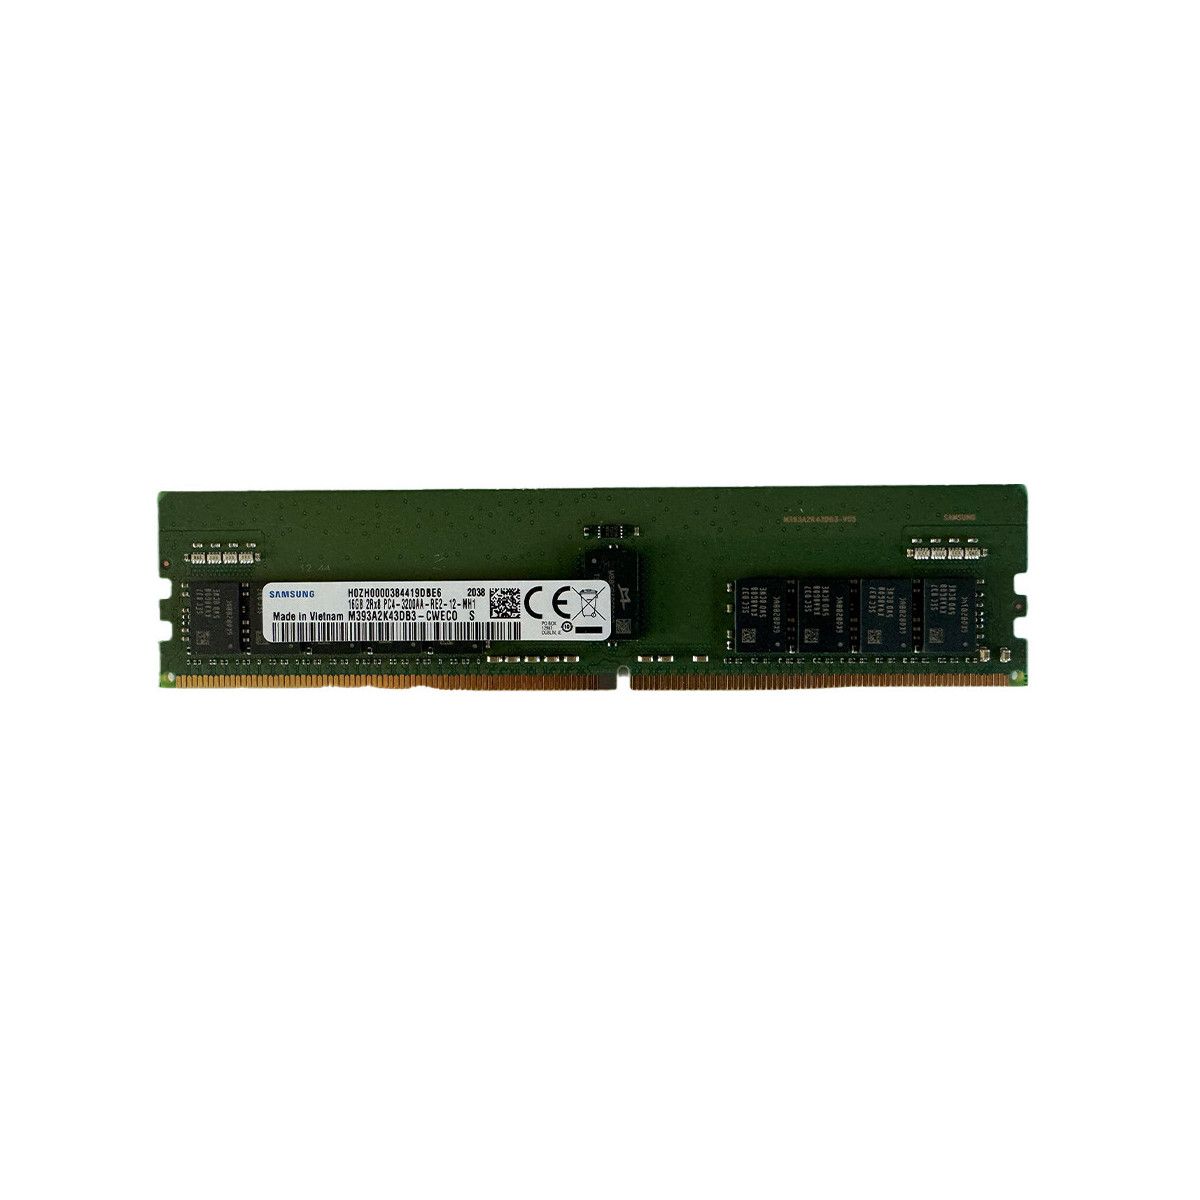 4ZC7A15121-MS -JA- Memstar 1x 16GB DDR4-3200 RDIMM PC4-25600R